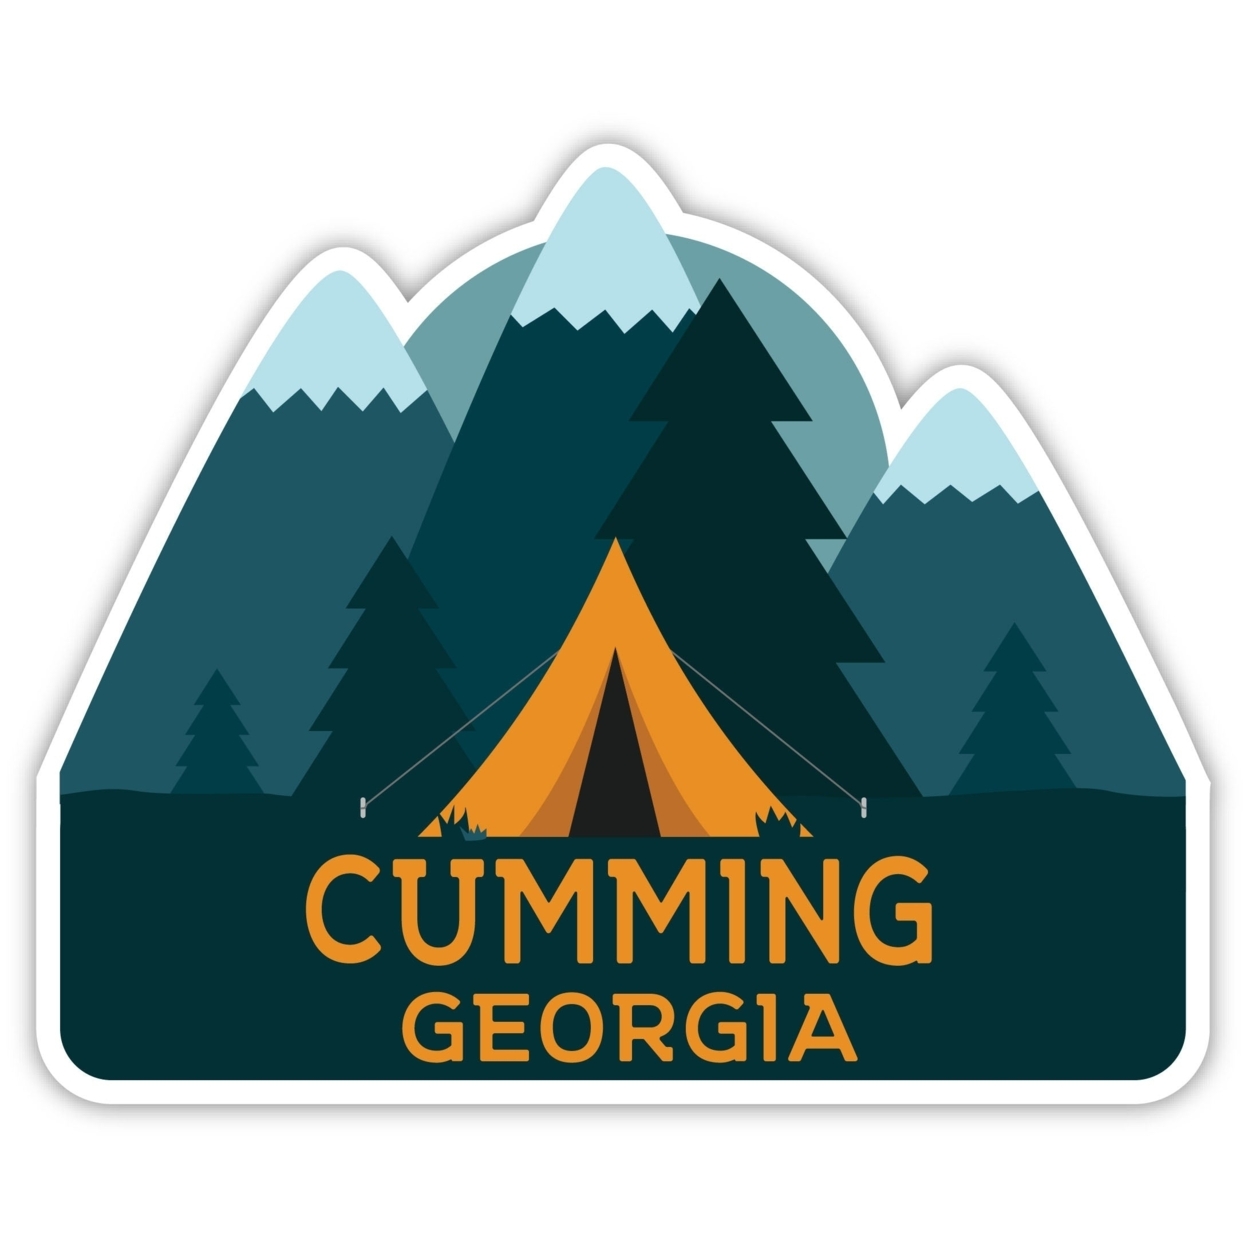 Cumming Georgia Souvenir Decorative Stickers (Choose Theme And Size) - 4-Pack, 4-Inch, Tent